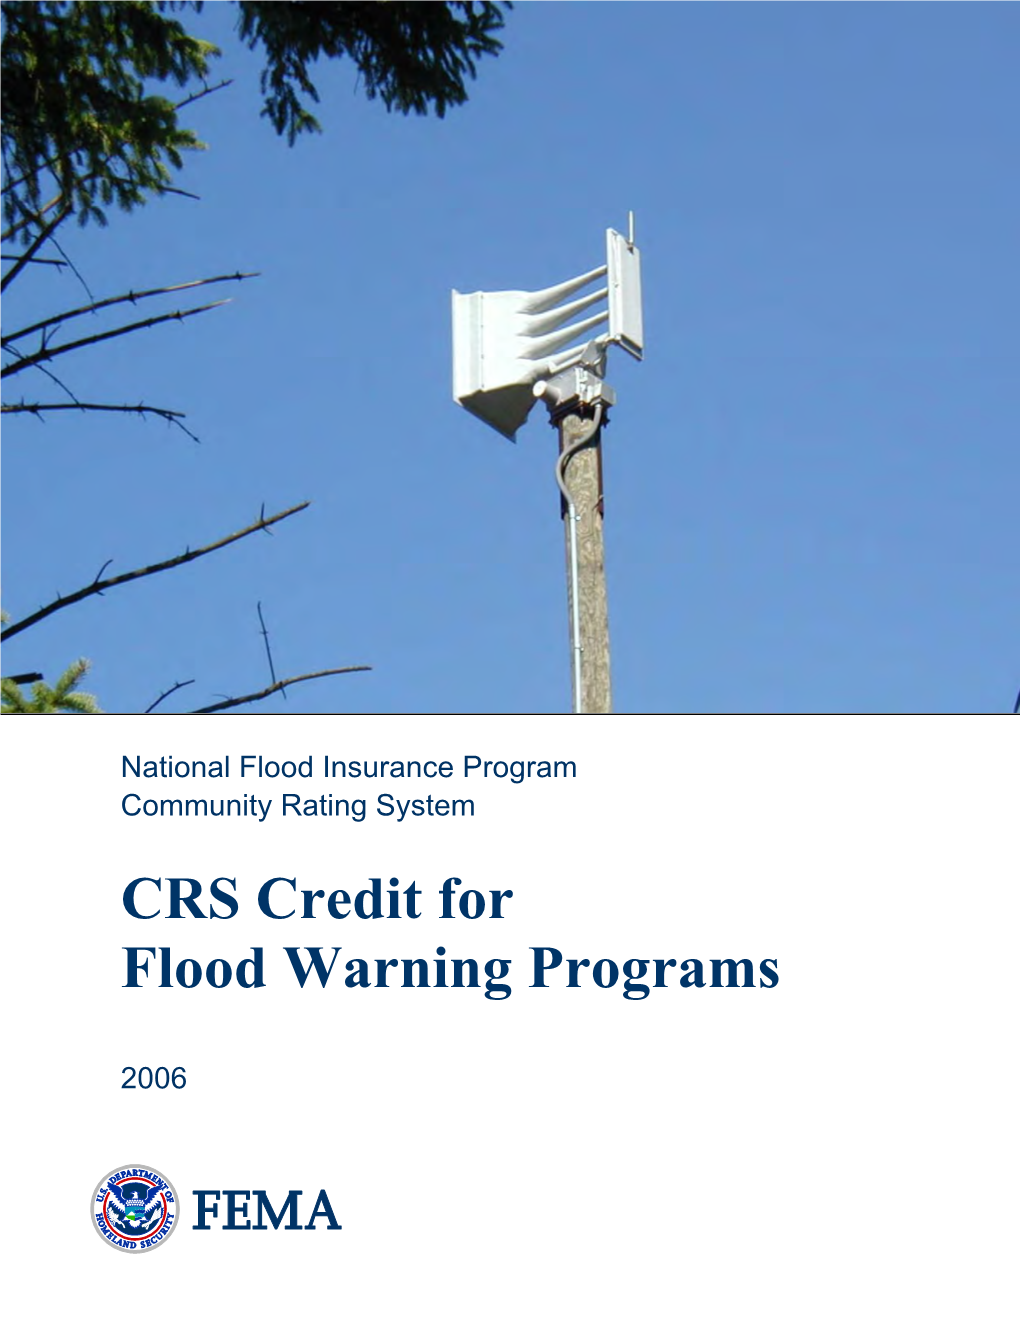 CRS Credit for Flood Warning Programs